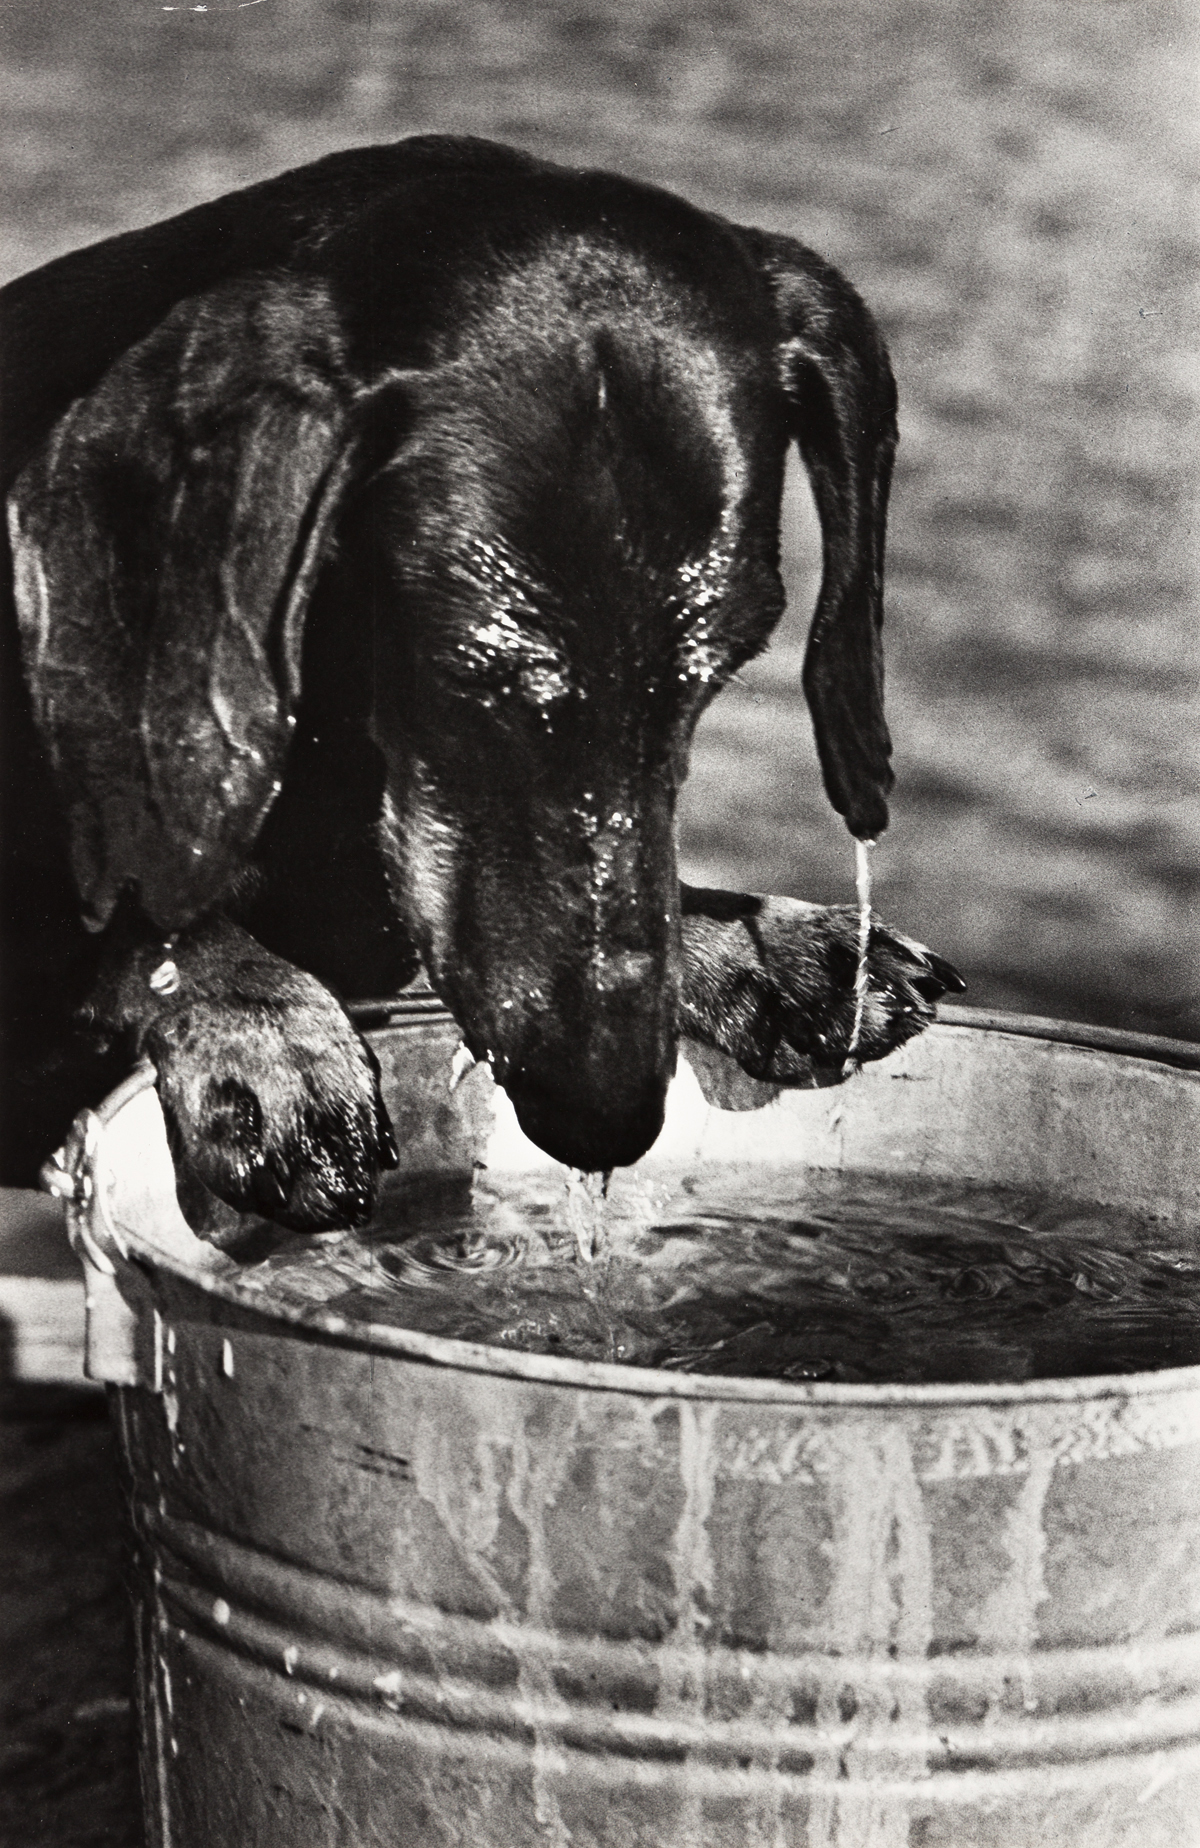 Frissell, Toni (1907-1988) Dachshund Drinking Water.